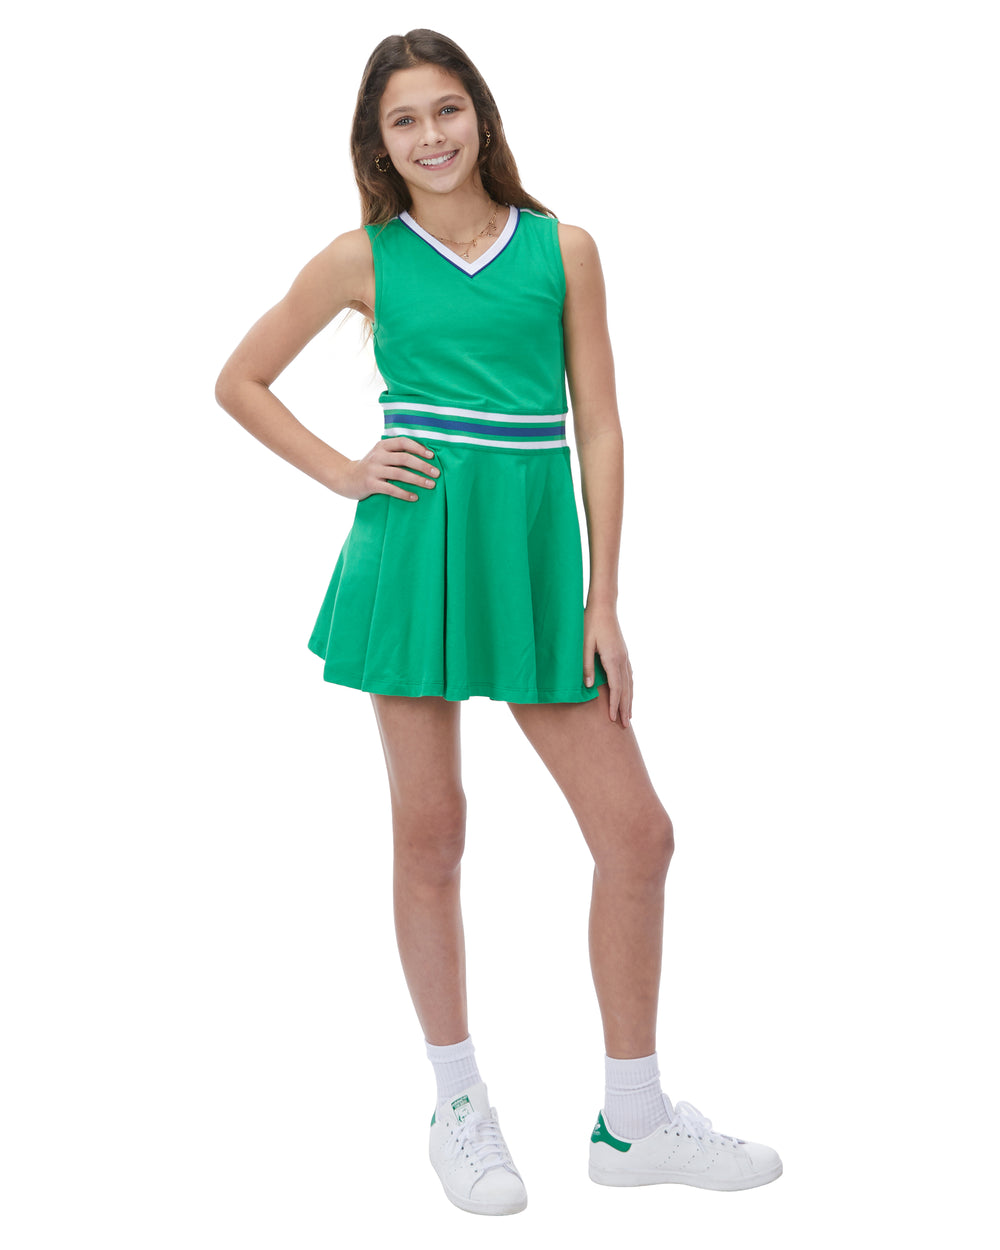 Girls Club Sleeveless Tennis Dress